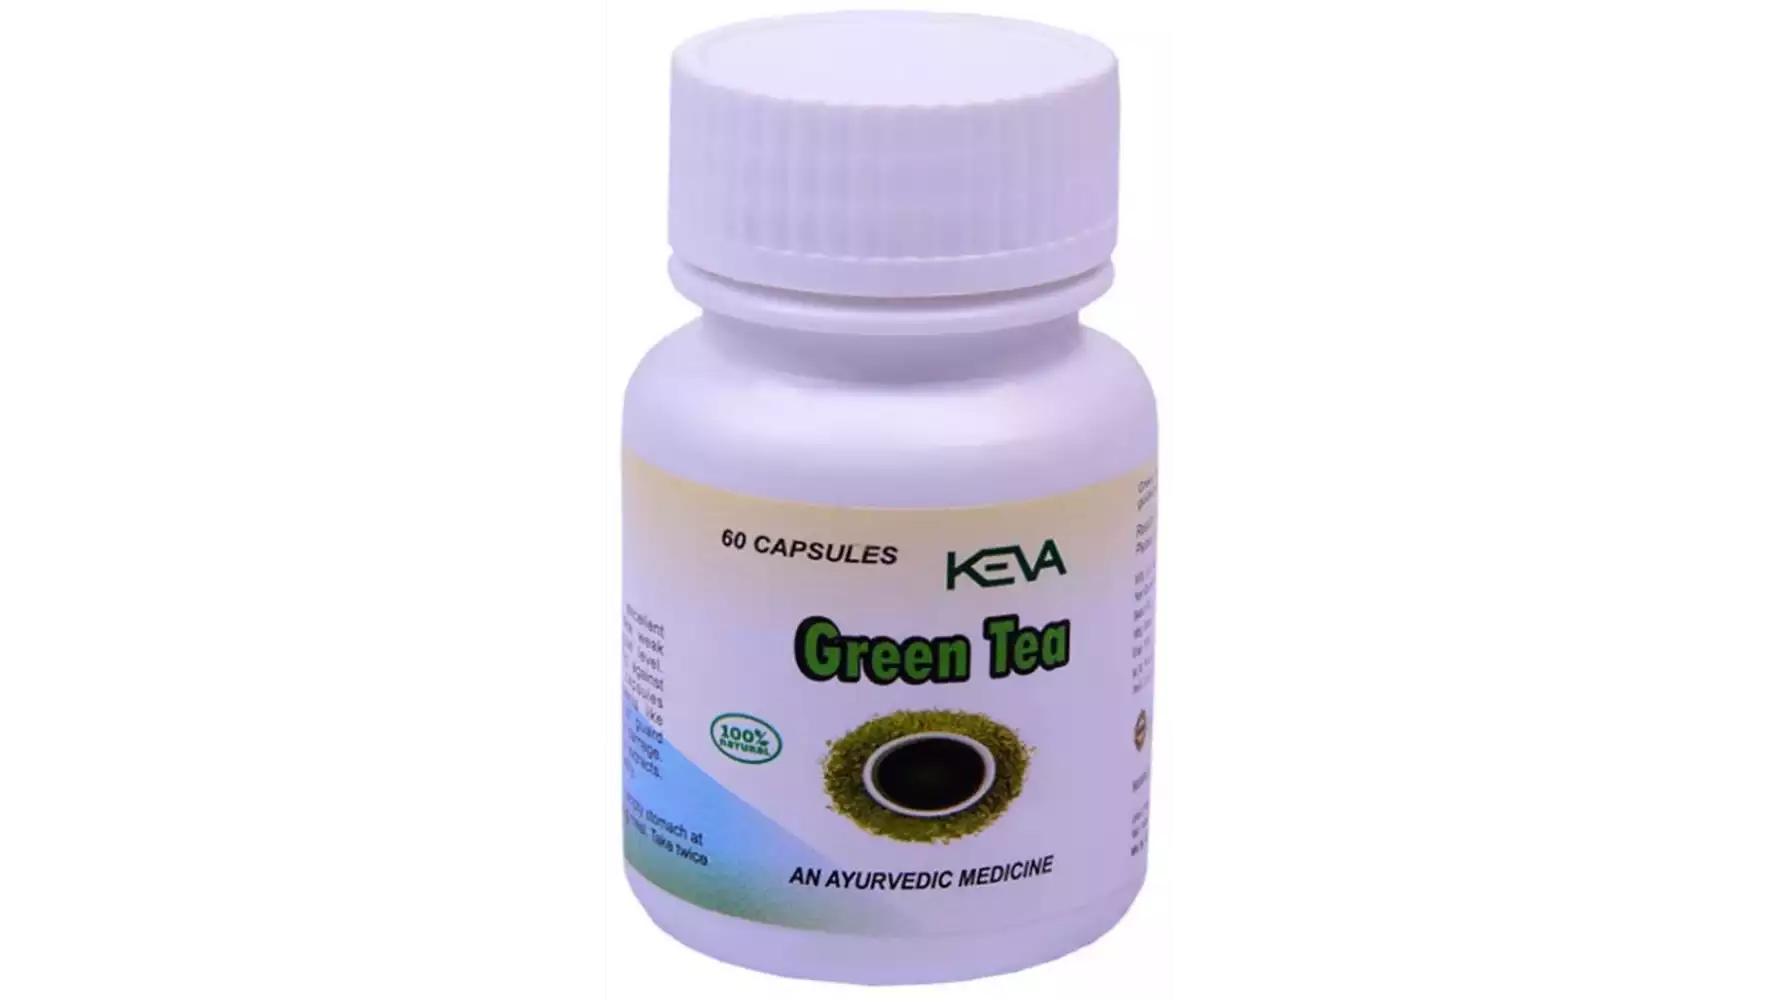 Keva Green Tea Capsules (60caps)